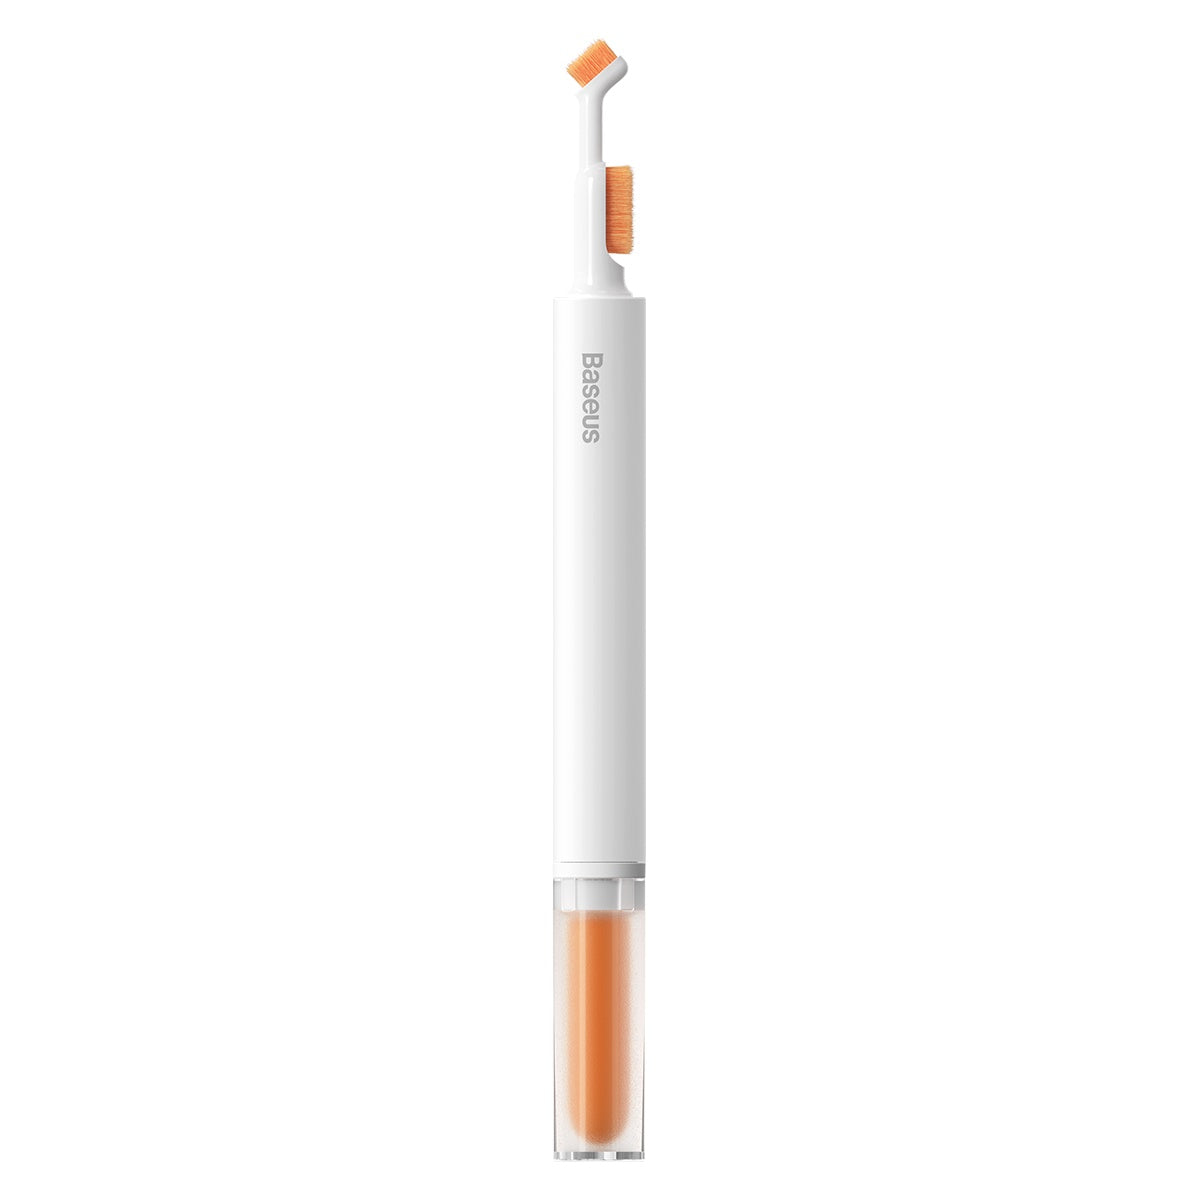 Baseus Cleaning Brush Pen | Earphones Cleaning Tool